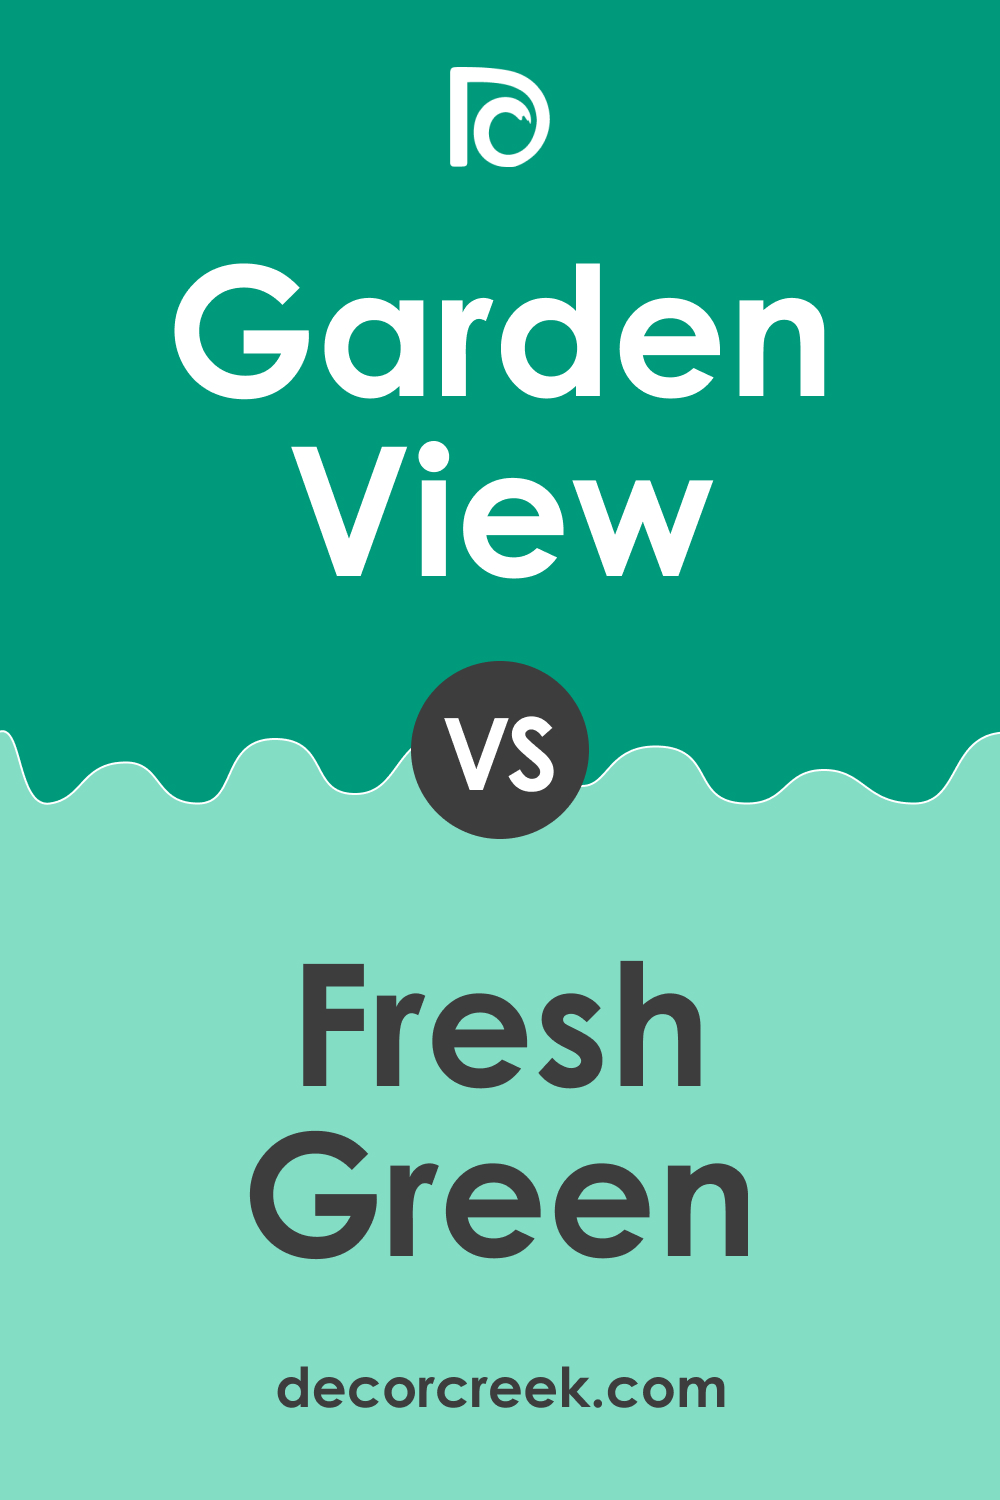 Garden View 616 vs. BM 613 Fresh Green